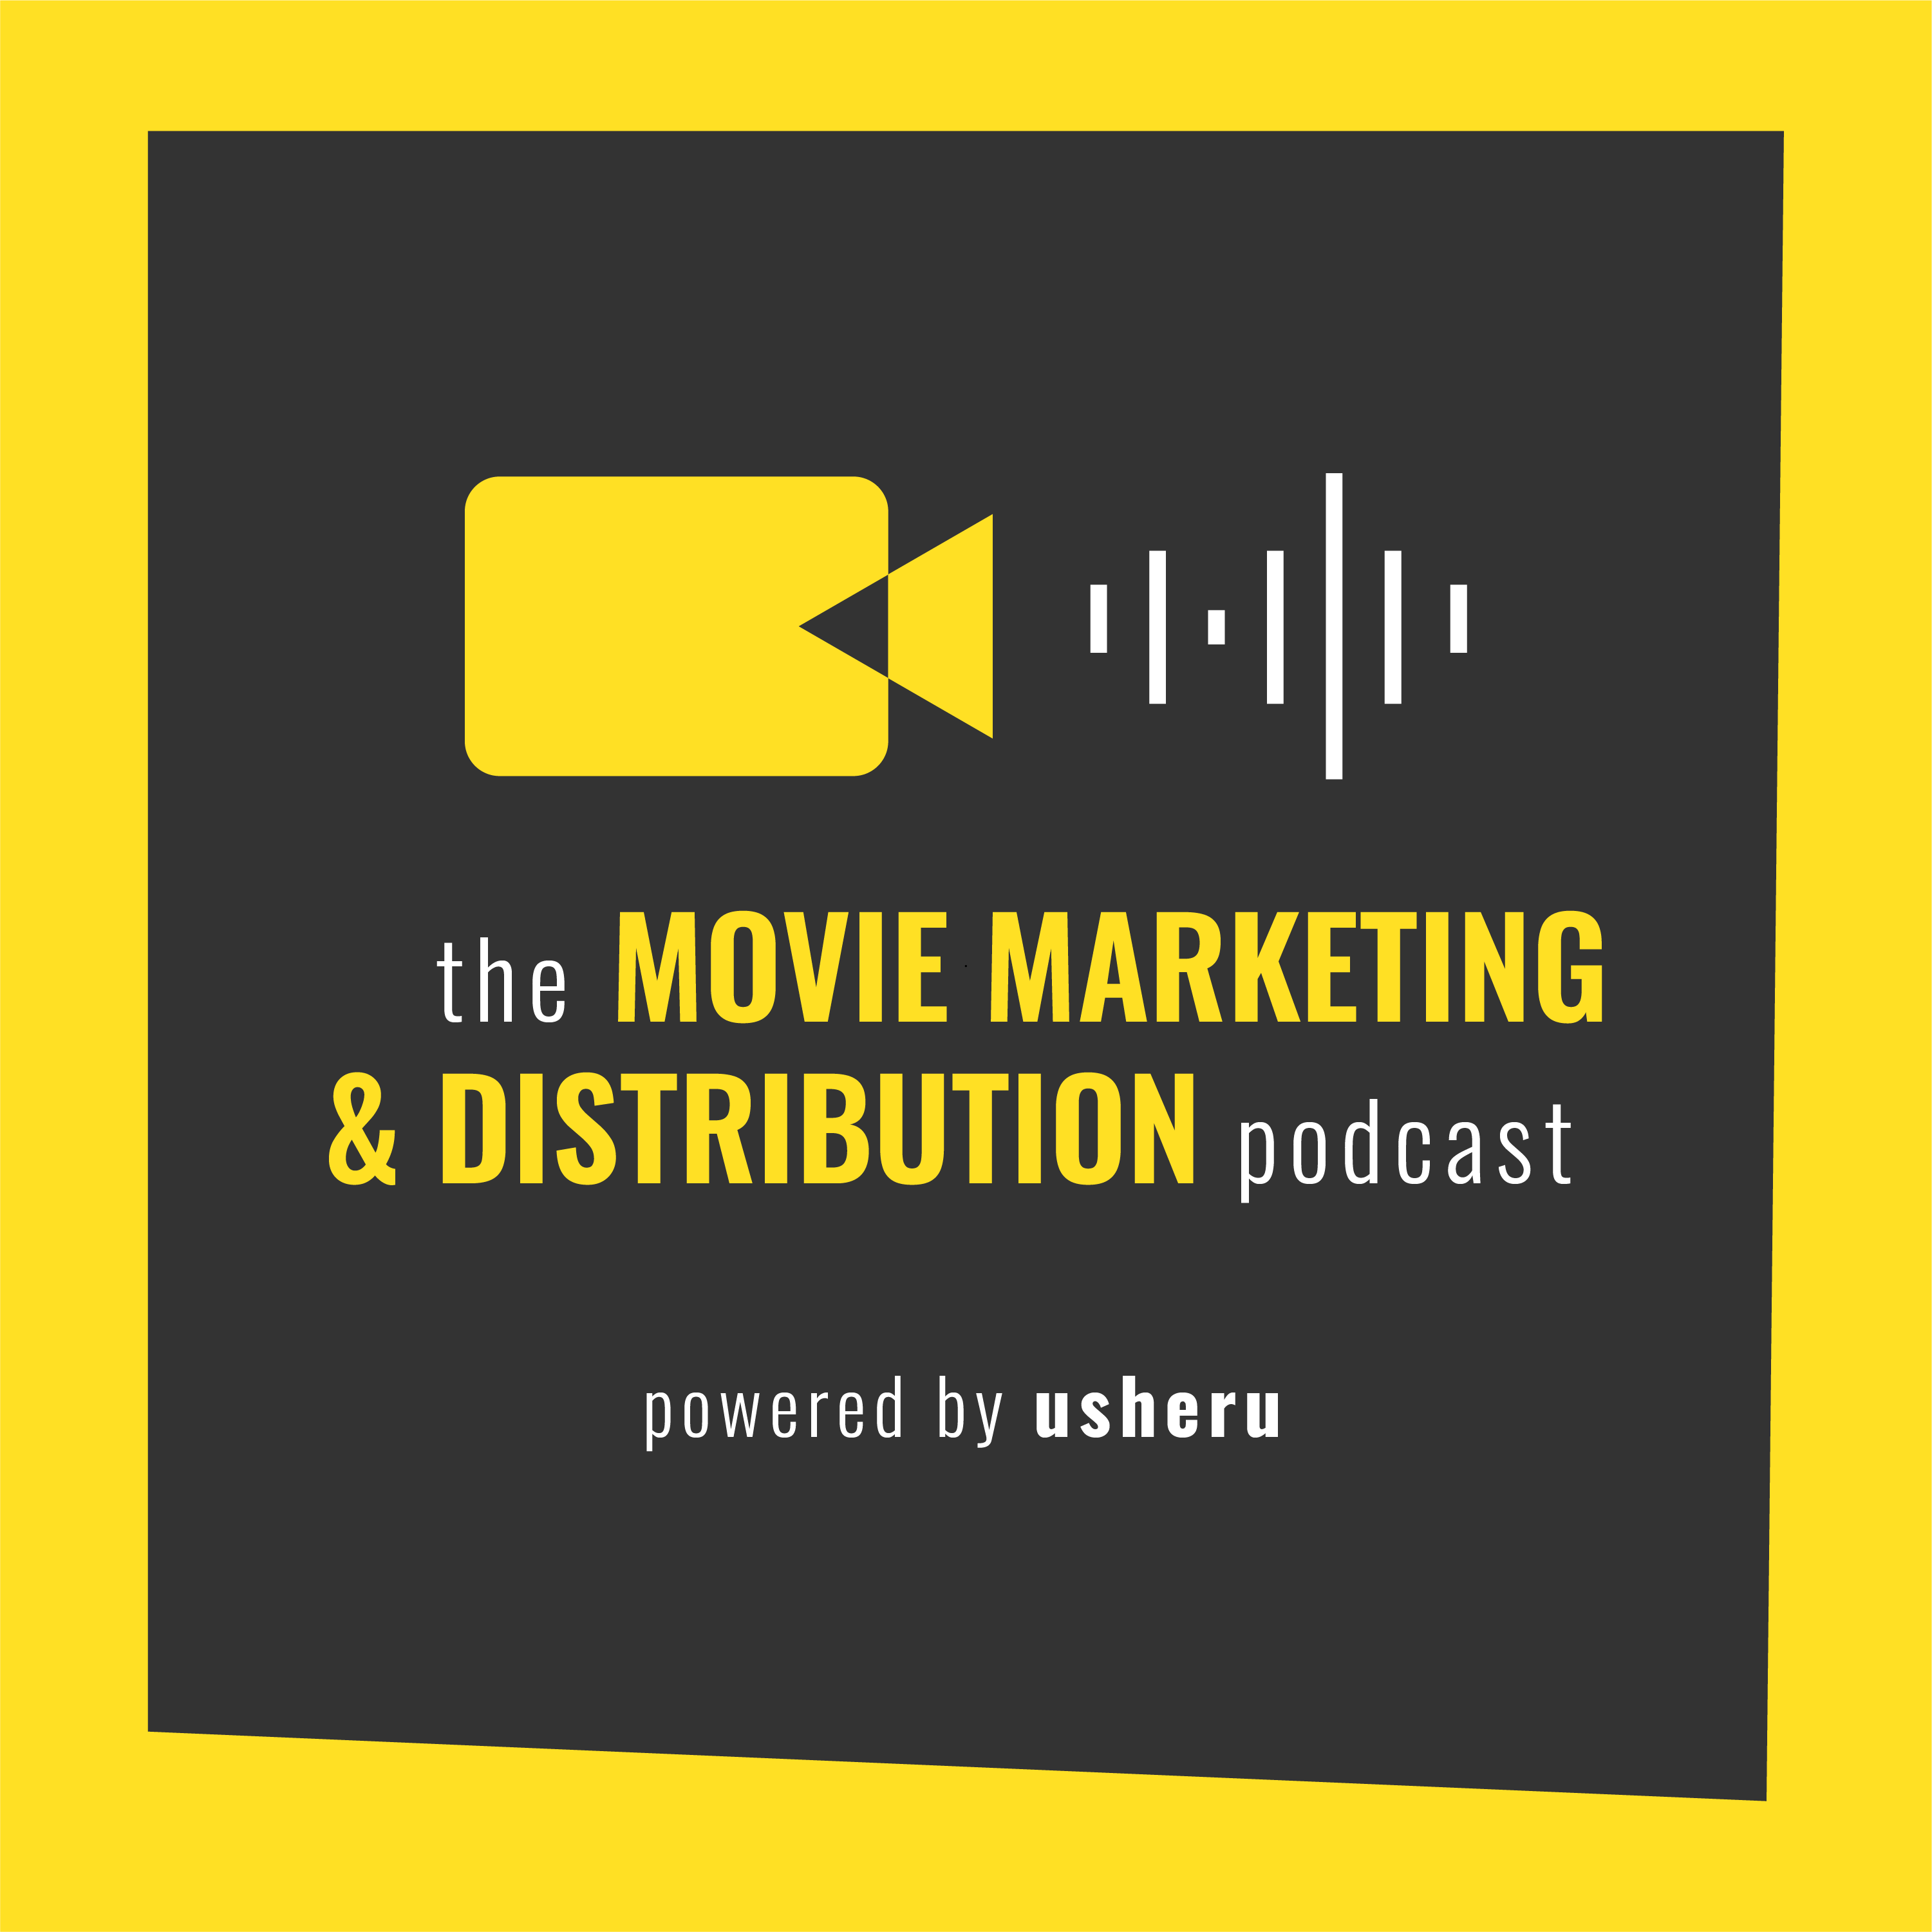 the movie marketing & distribution podcast